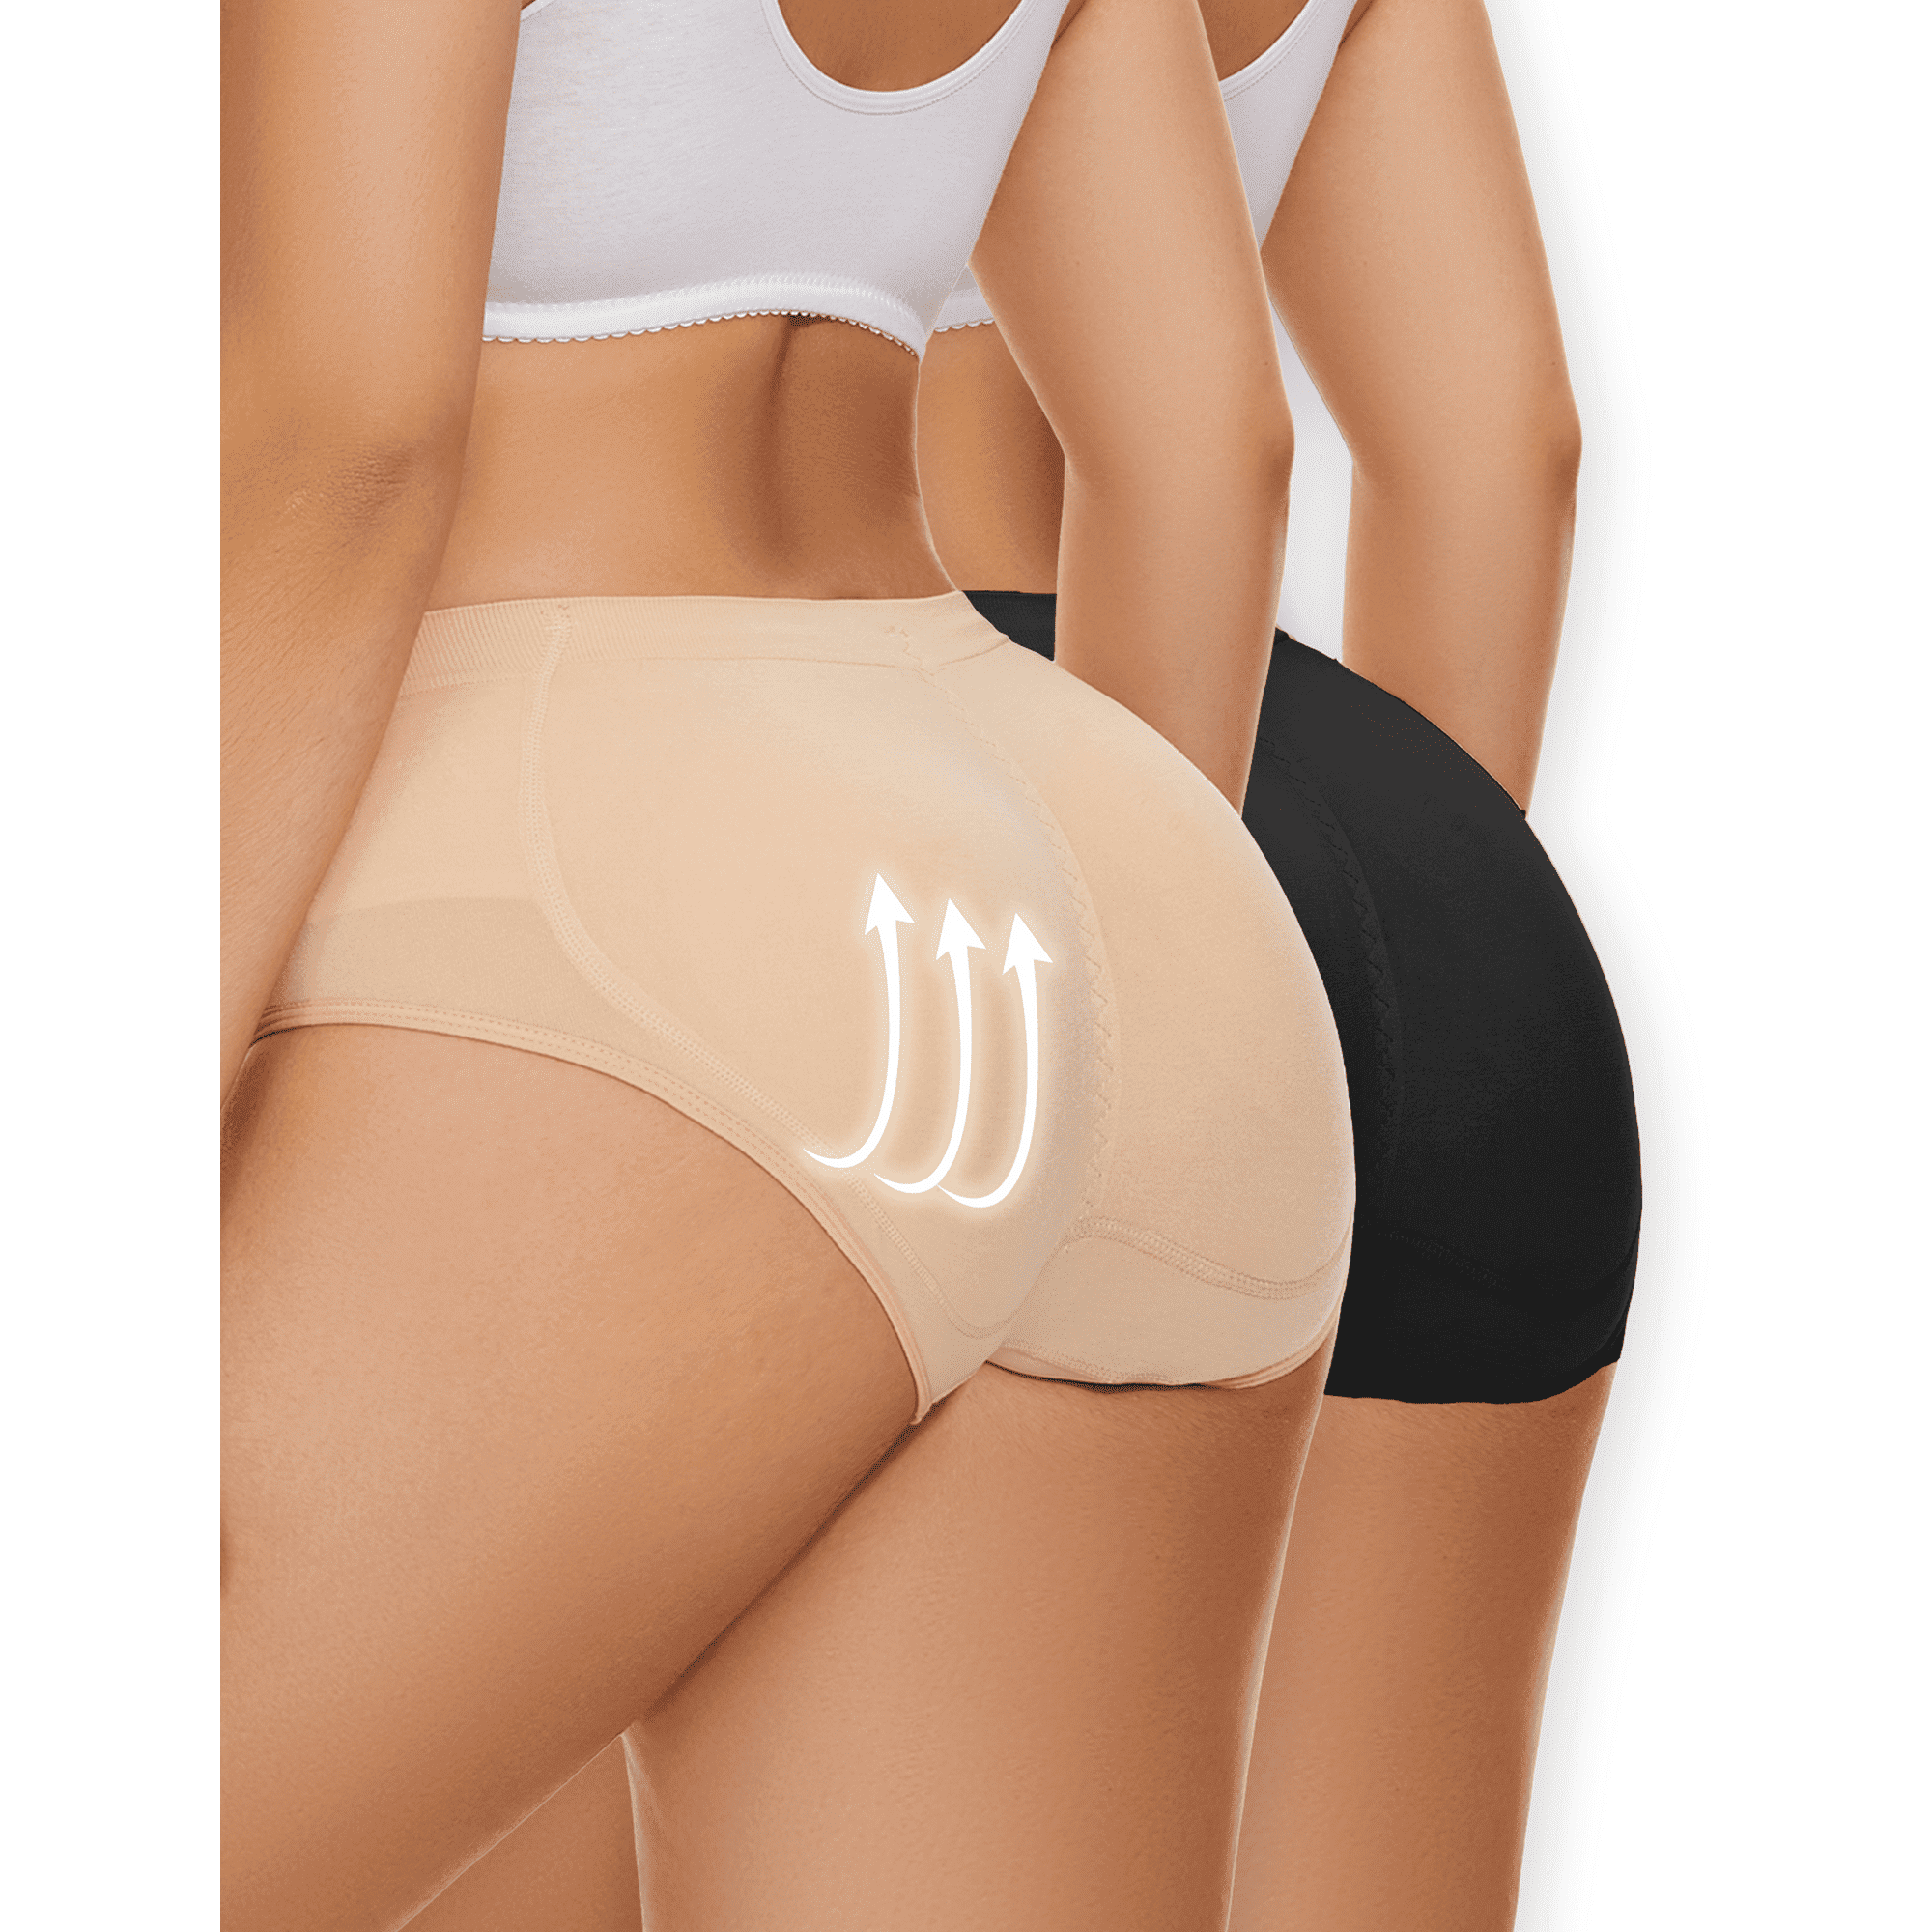 Htwon Womens Seamless Butt Lifter Panties Padded Removable Butt Pad Lace  Shapewear Panty Panties Enhancer Underwear